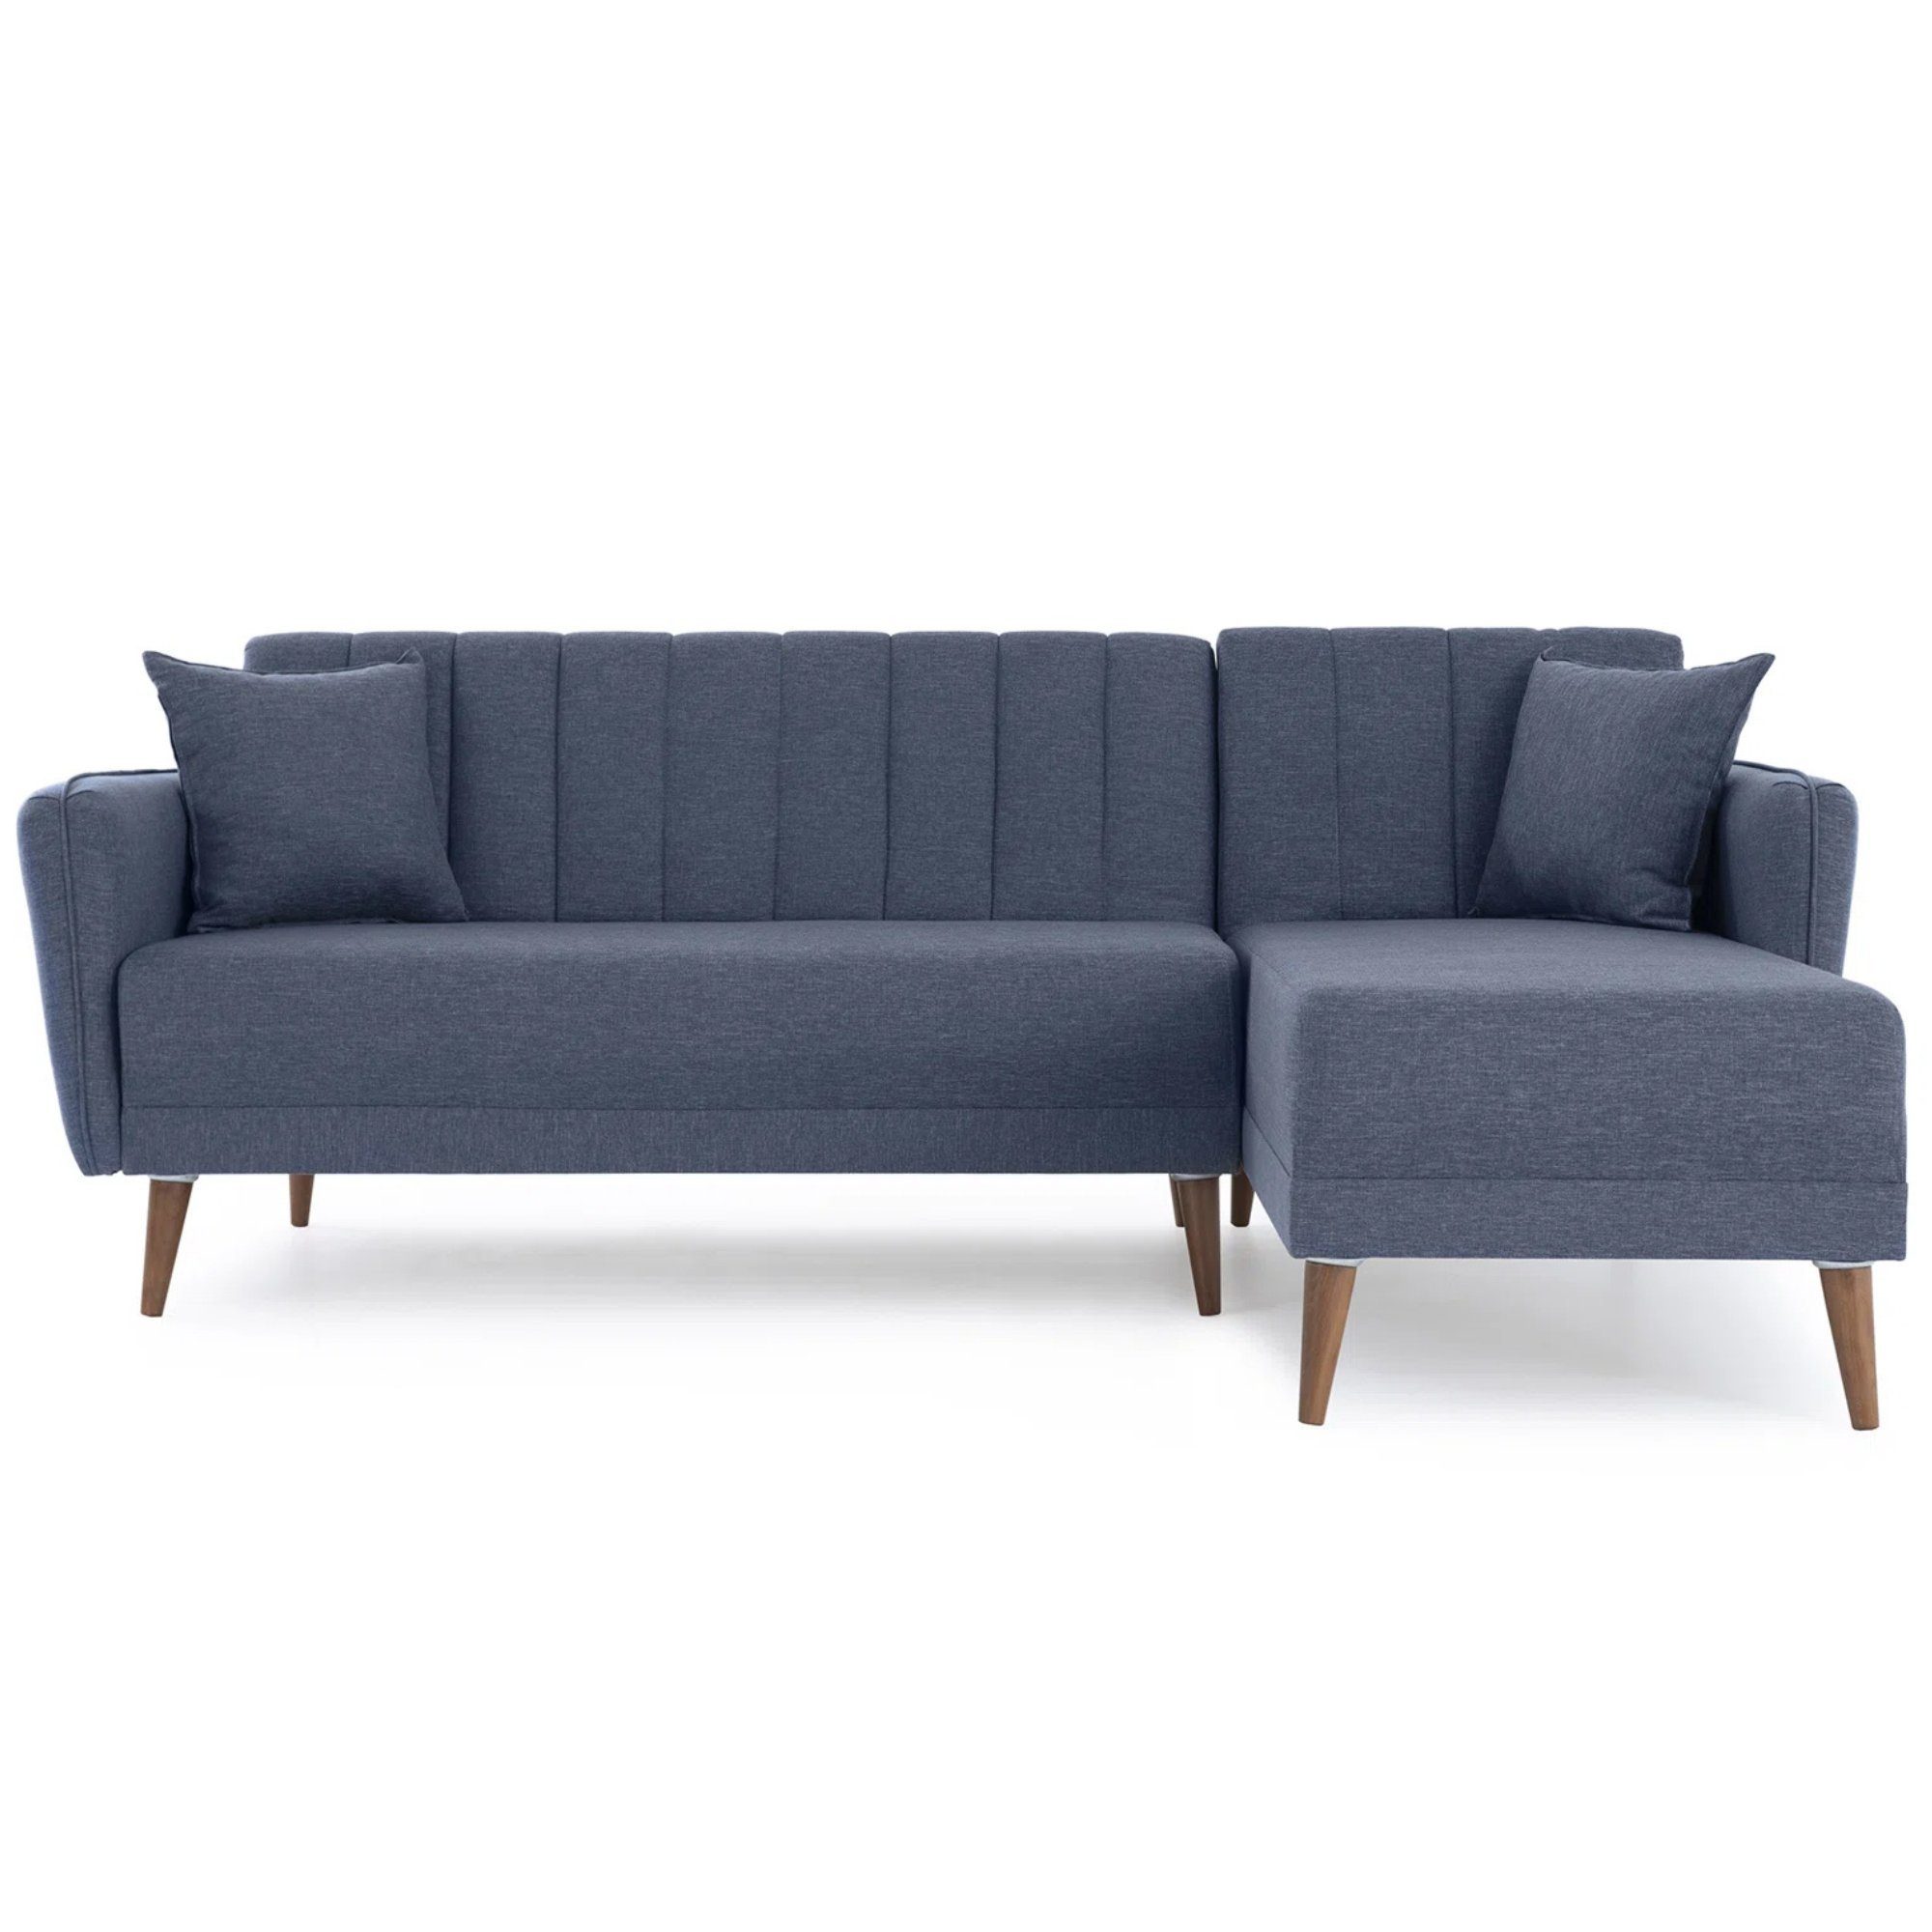 Gozos Ecksofa Gozos Mammo Sitzgruppe Ecksofa, Bettfunktion Couch, 225 x 150 x 85 cm, mit Relaxfunktion Navy Blau